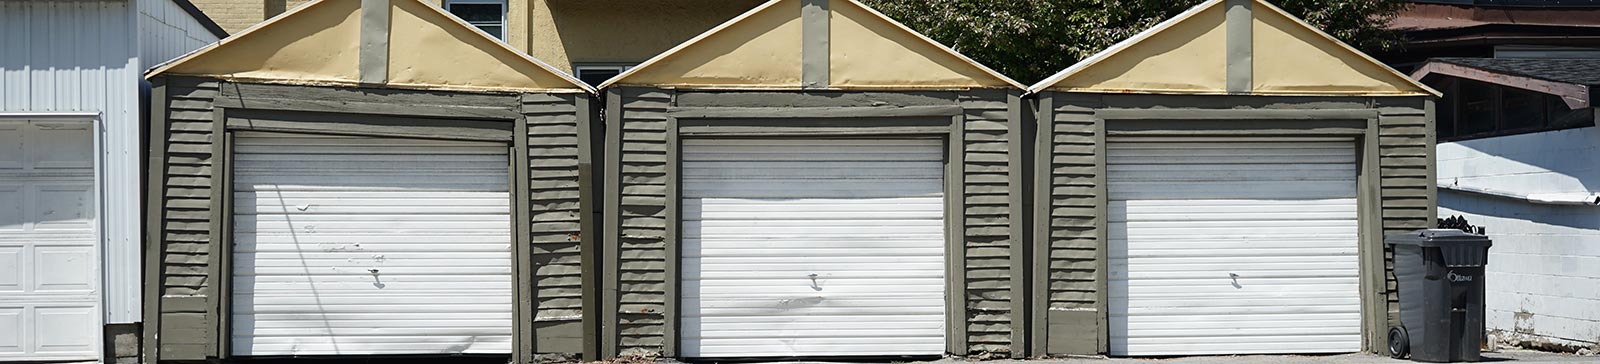 Garage Door Maintenance Near Me Glendora CA